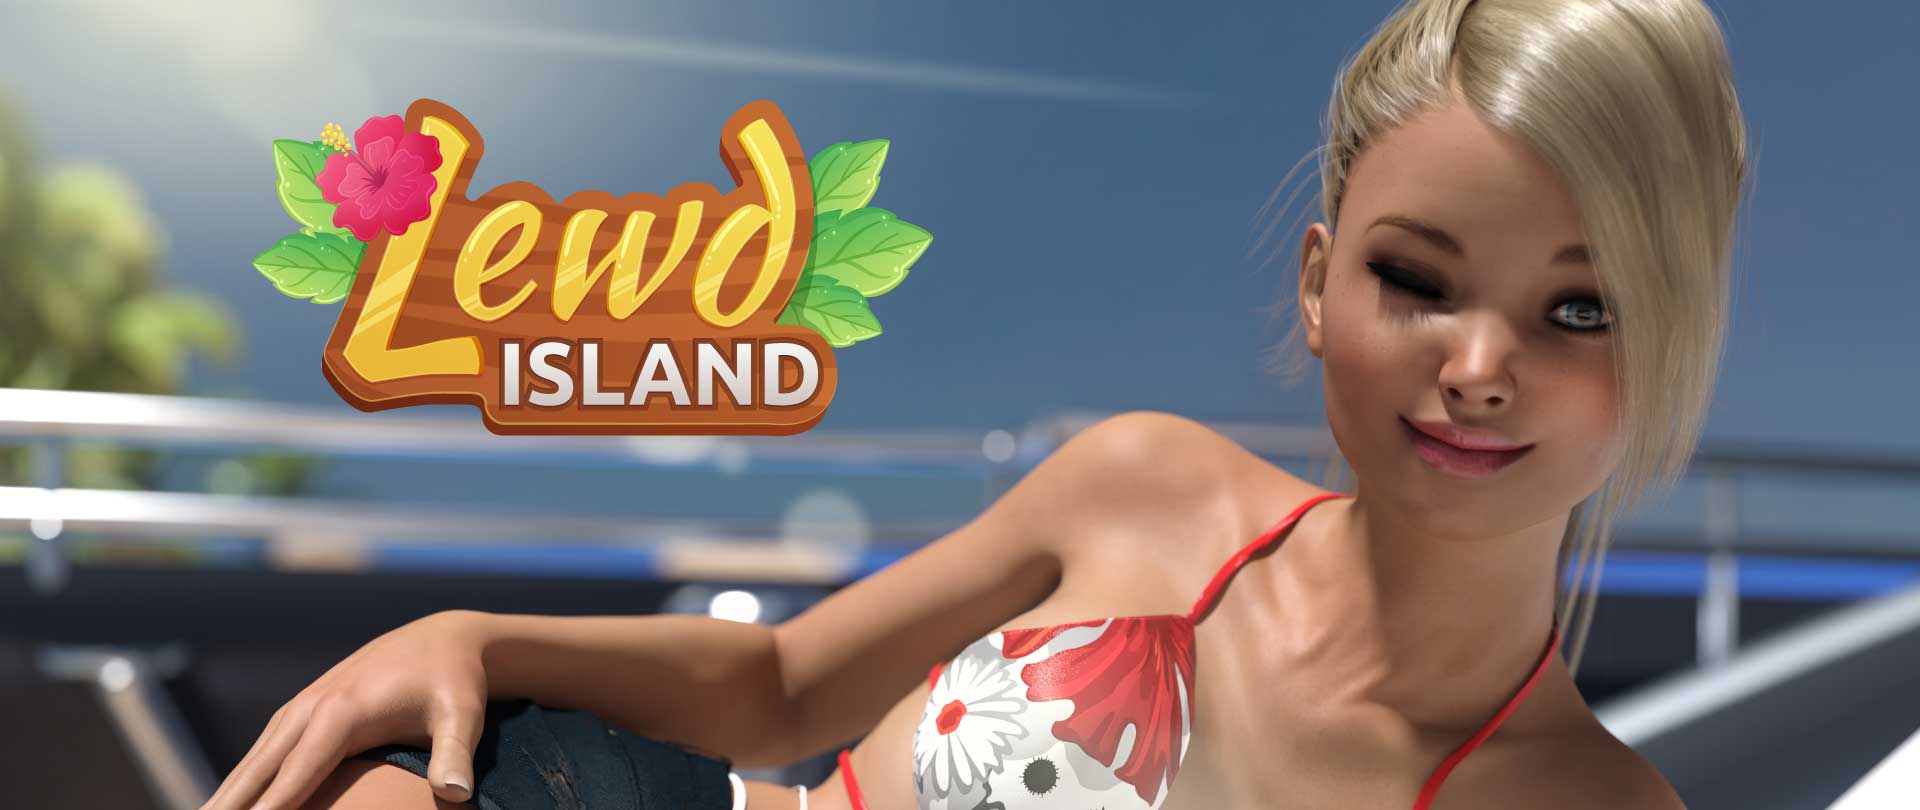 Lewd Island Adult Game Download